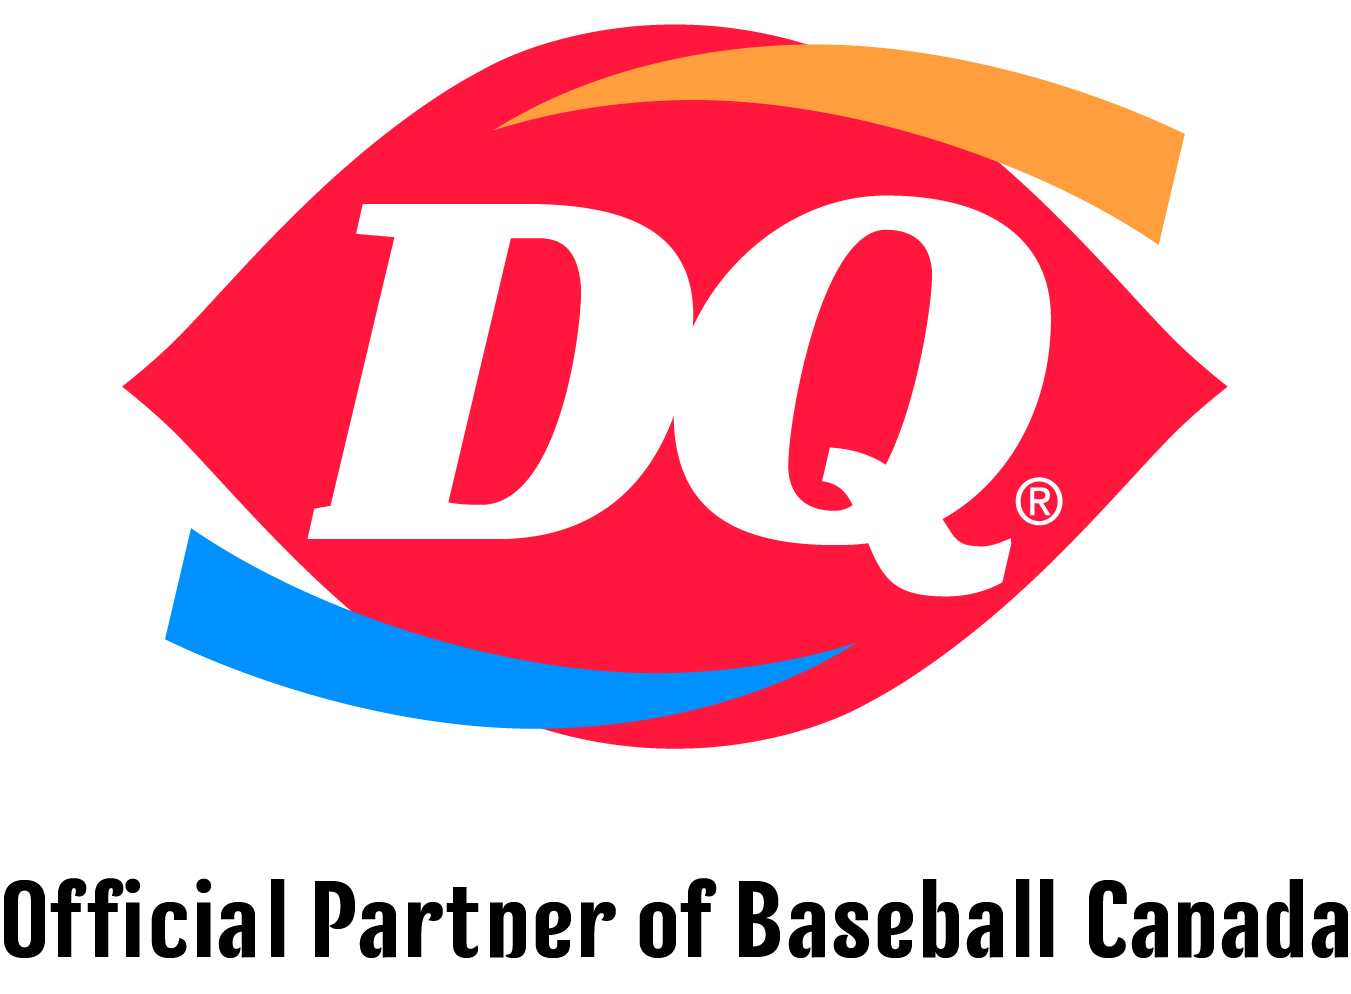 Baseball Canada reaches historic partnership with Dairy Queen Canada